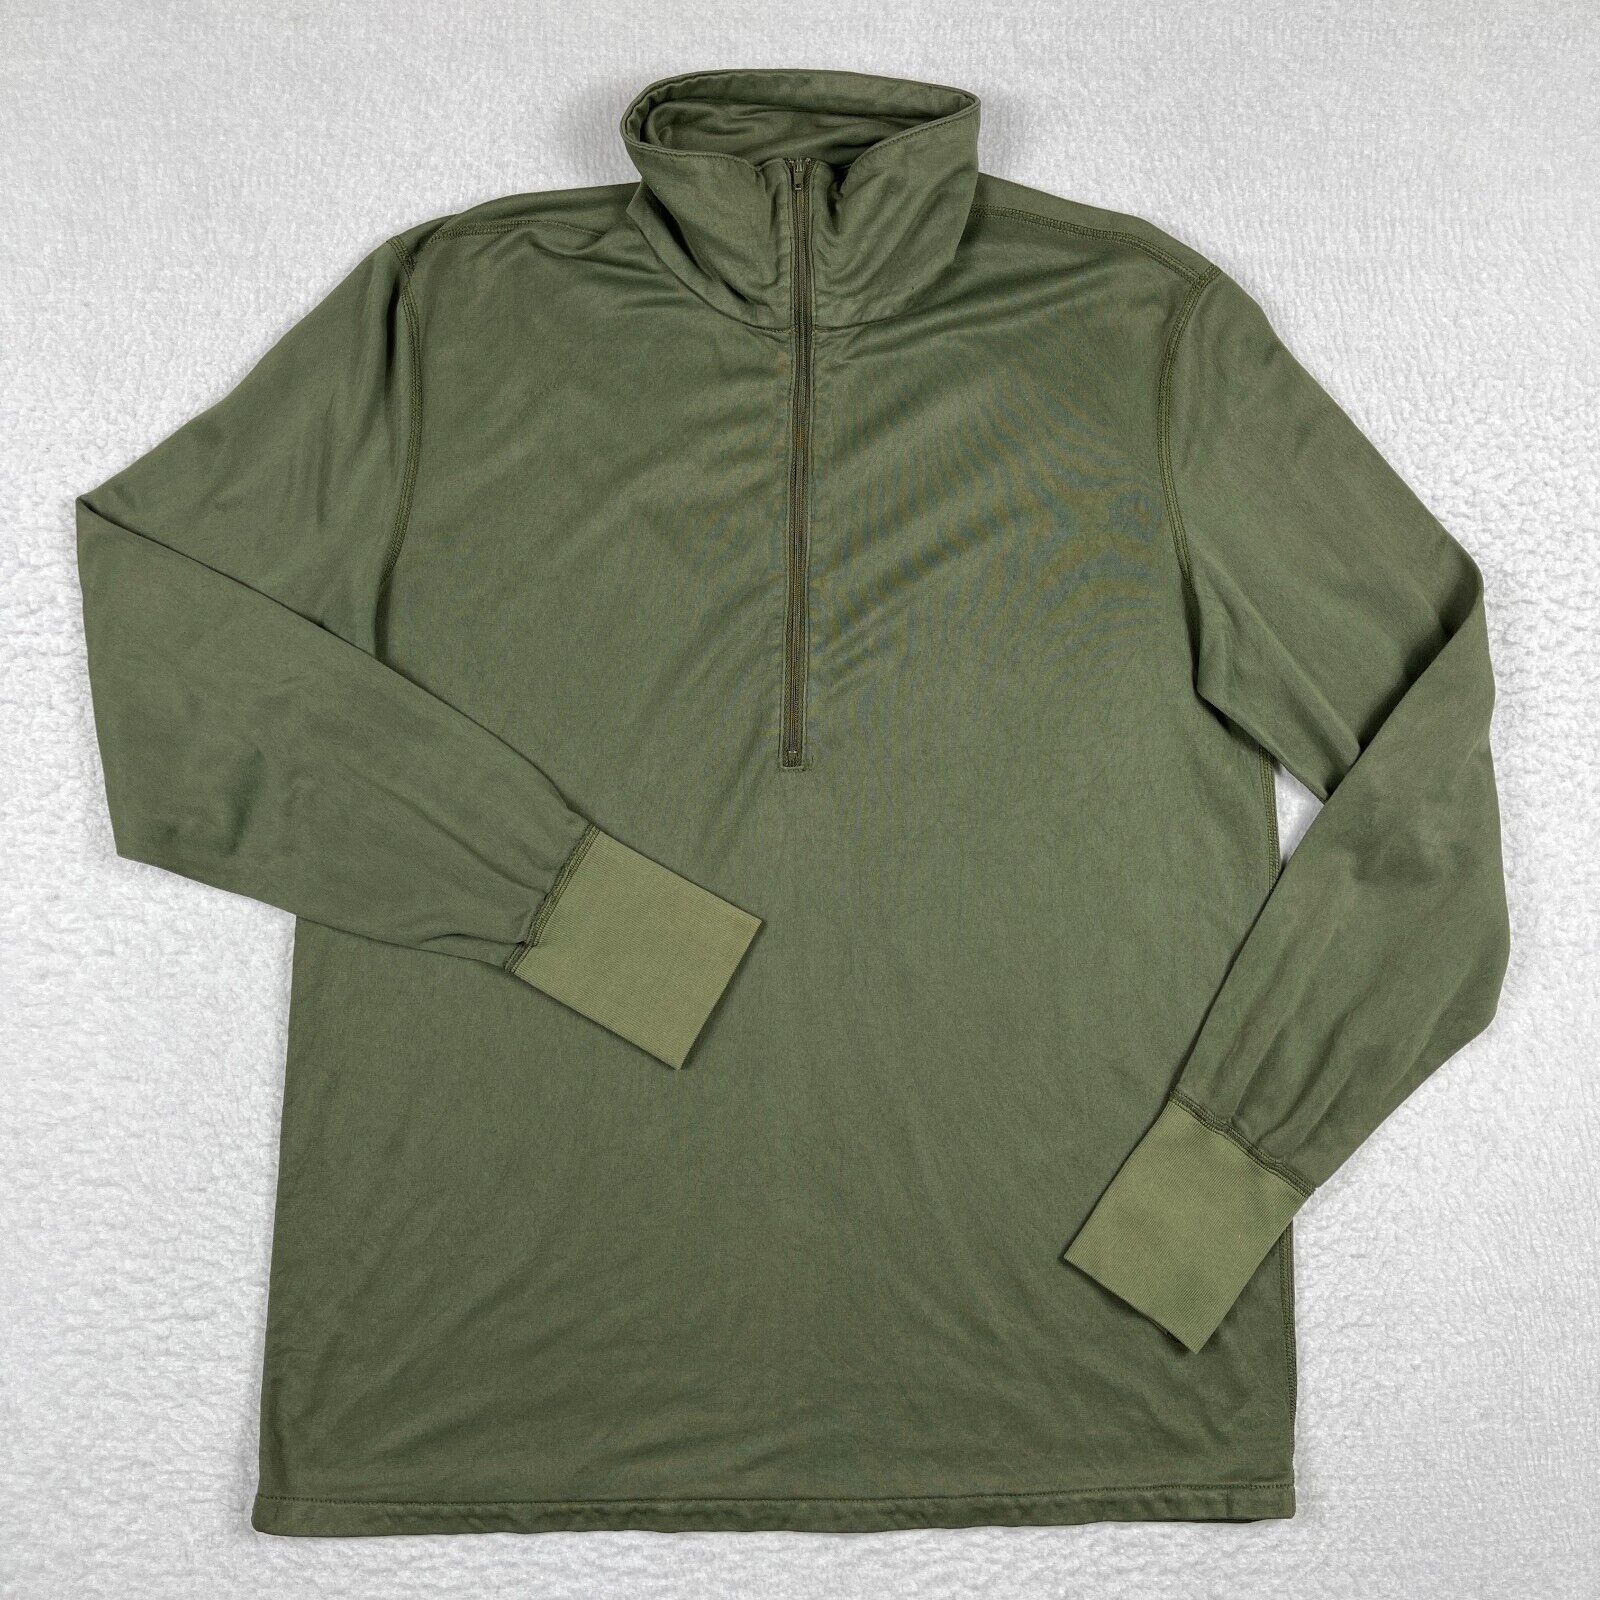 K-L Mfg Shirt Mens Medium Green Sleeping 1/2 Zip Heat Retentive Moisture Resist